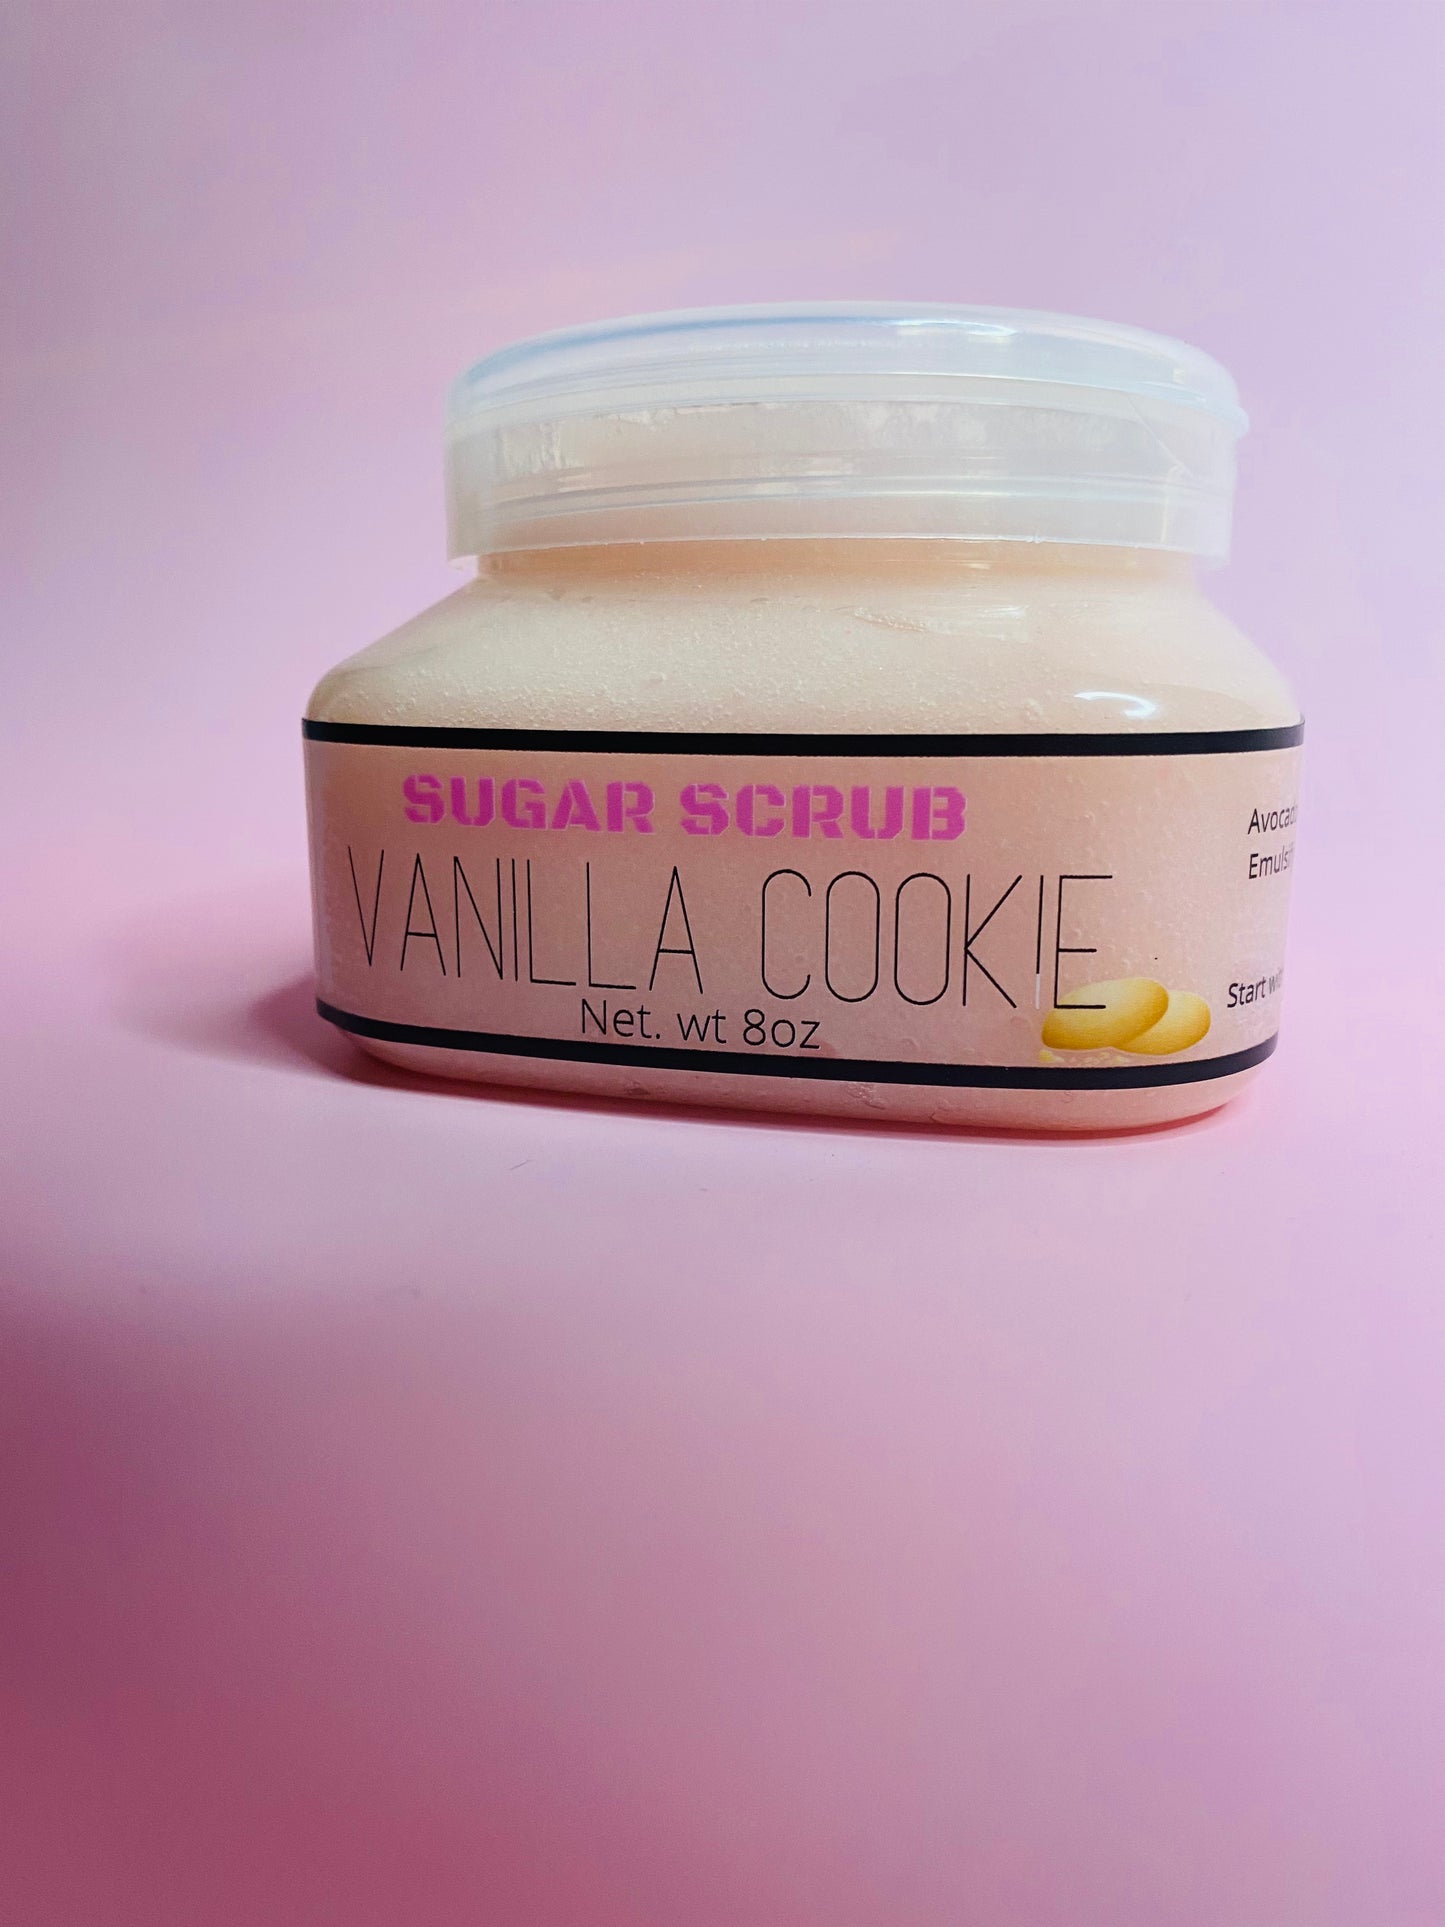 Vanilla Cookie Sugar Scrub